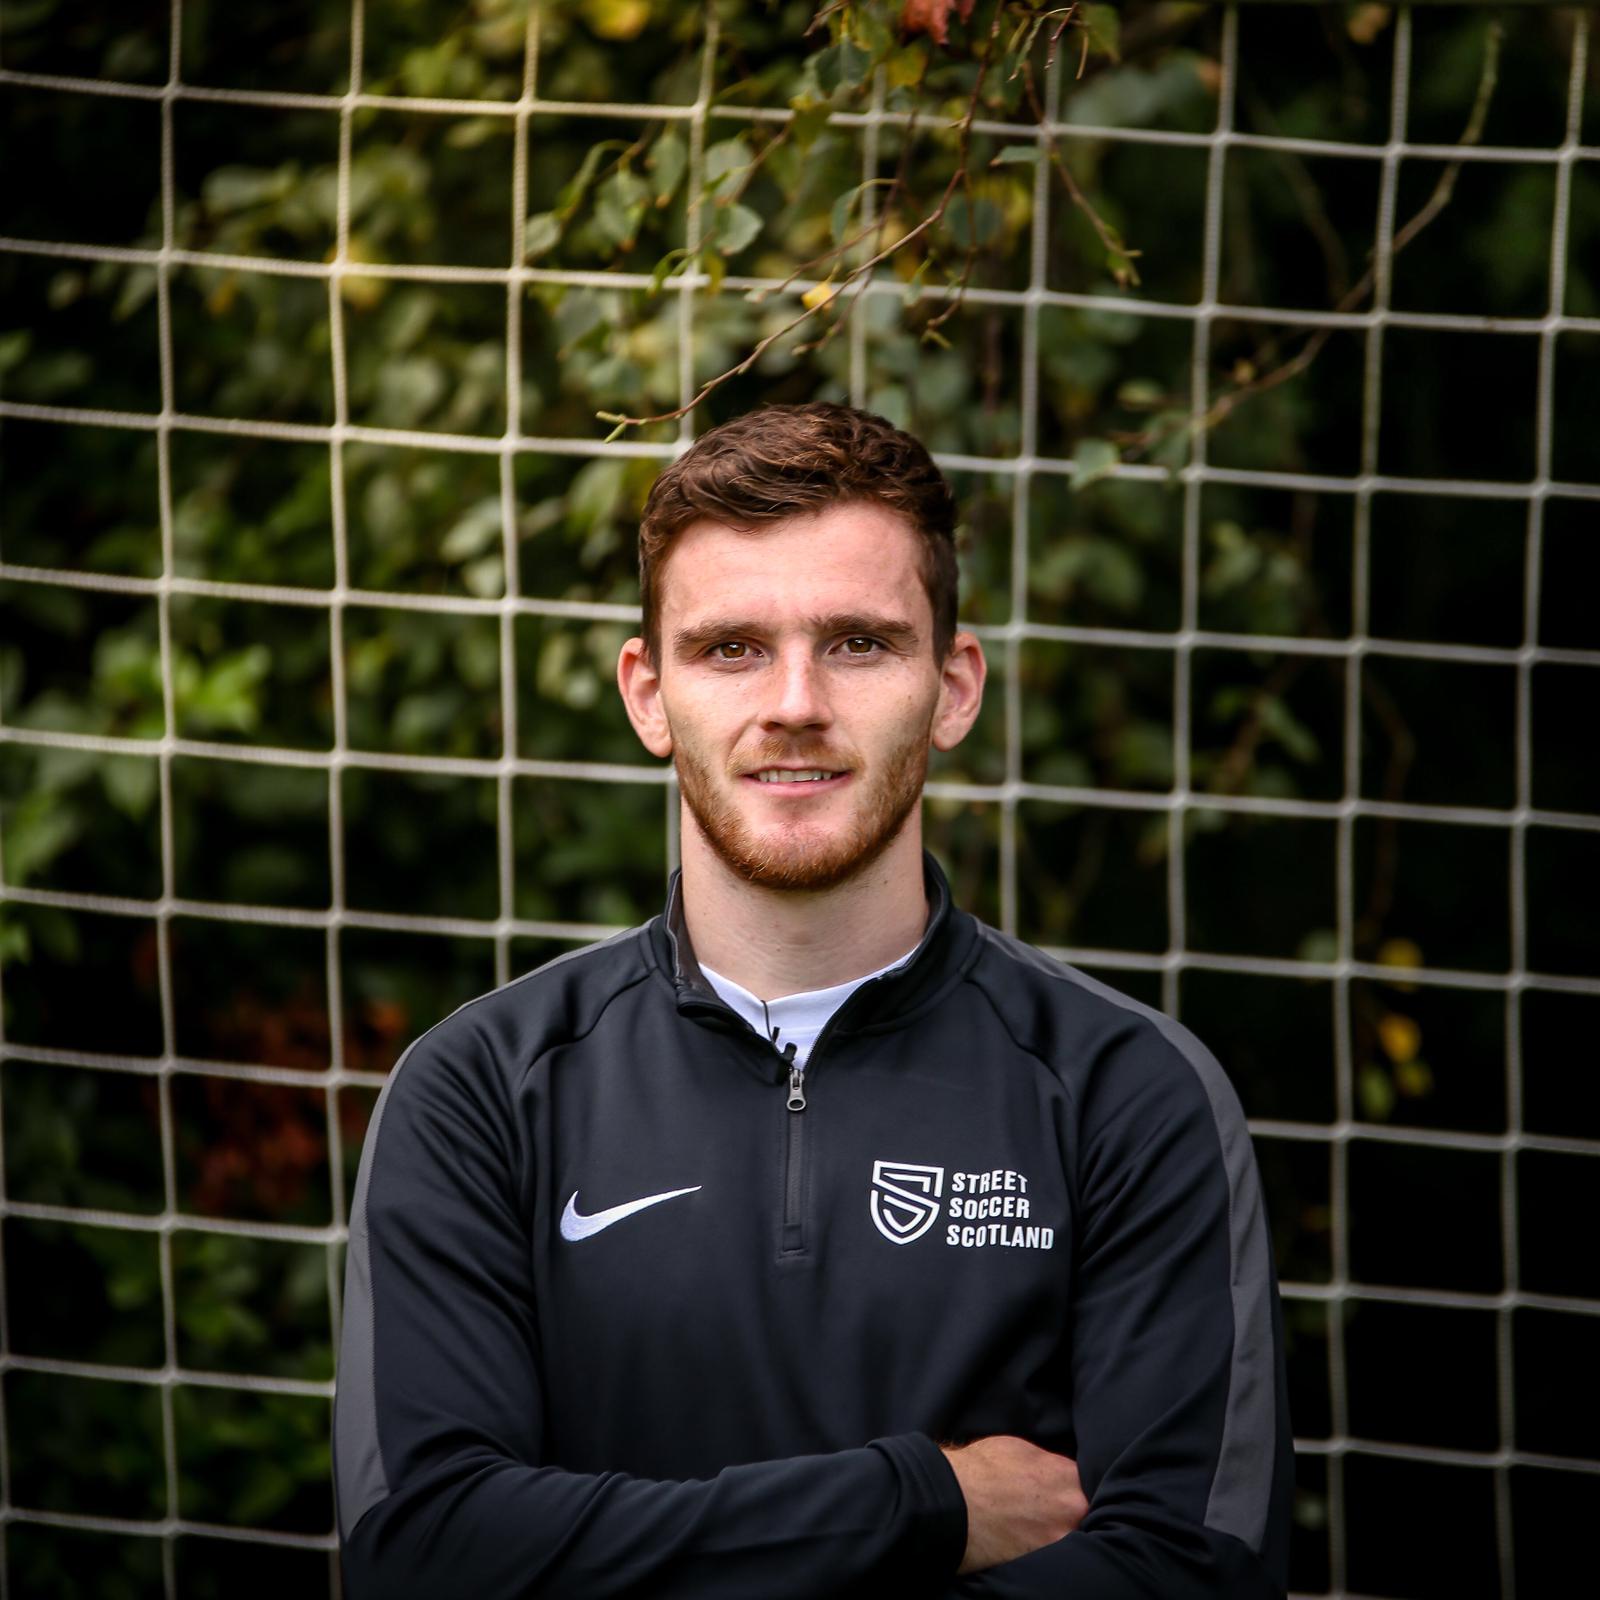 Andy Robertson named Street Soccer Scotland ambassador